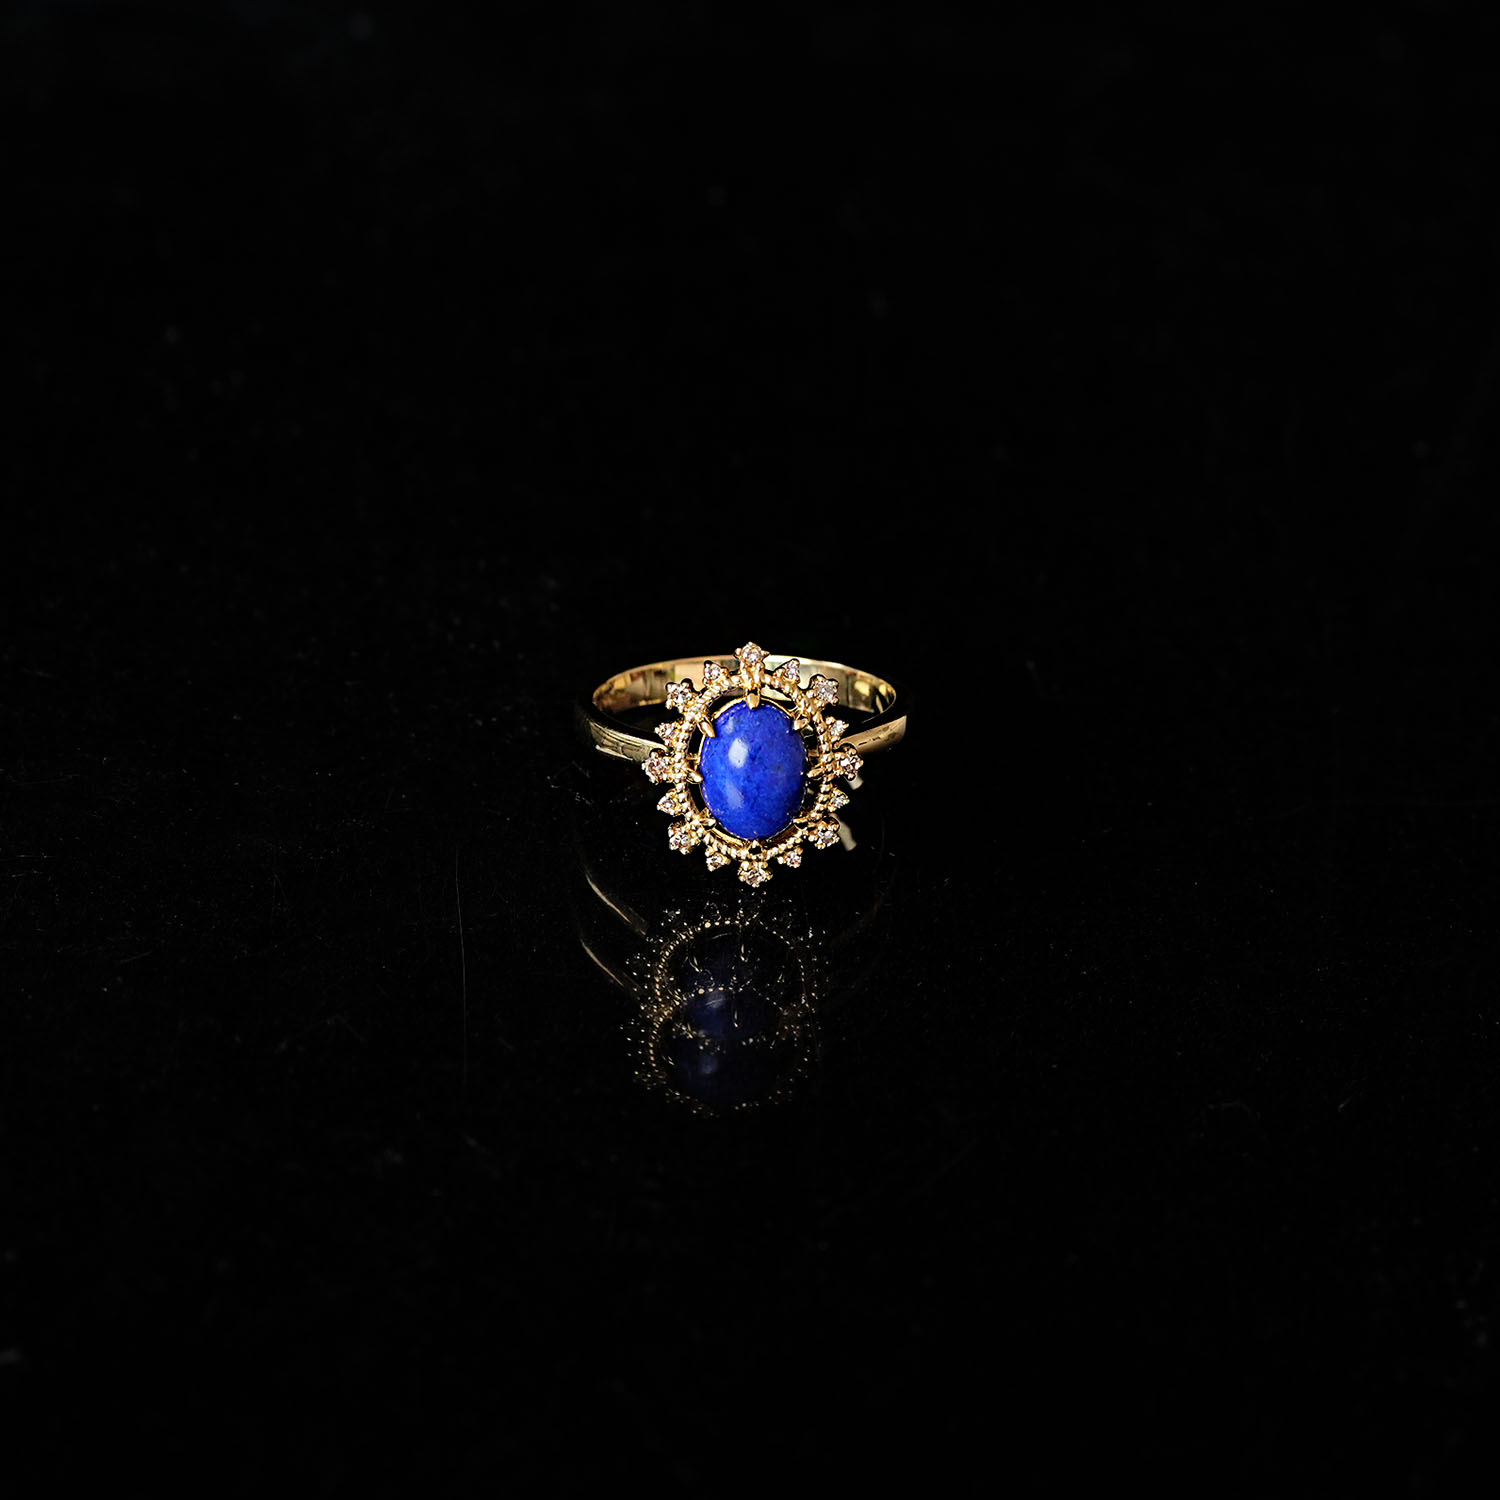 Bright blue ring